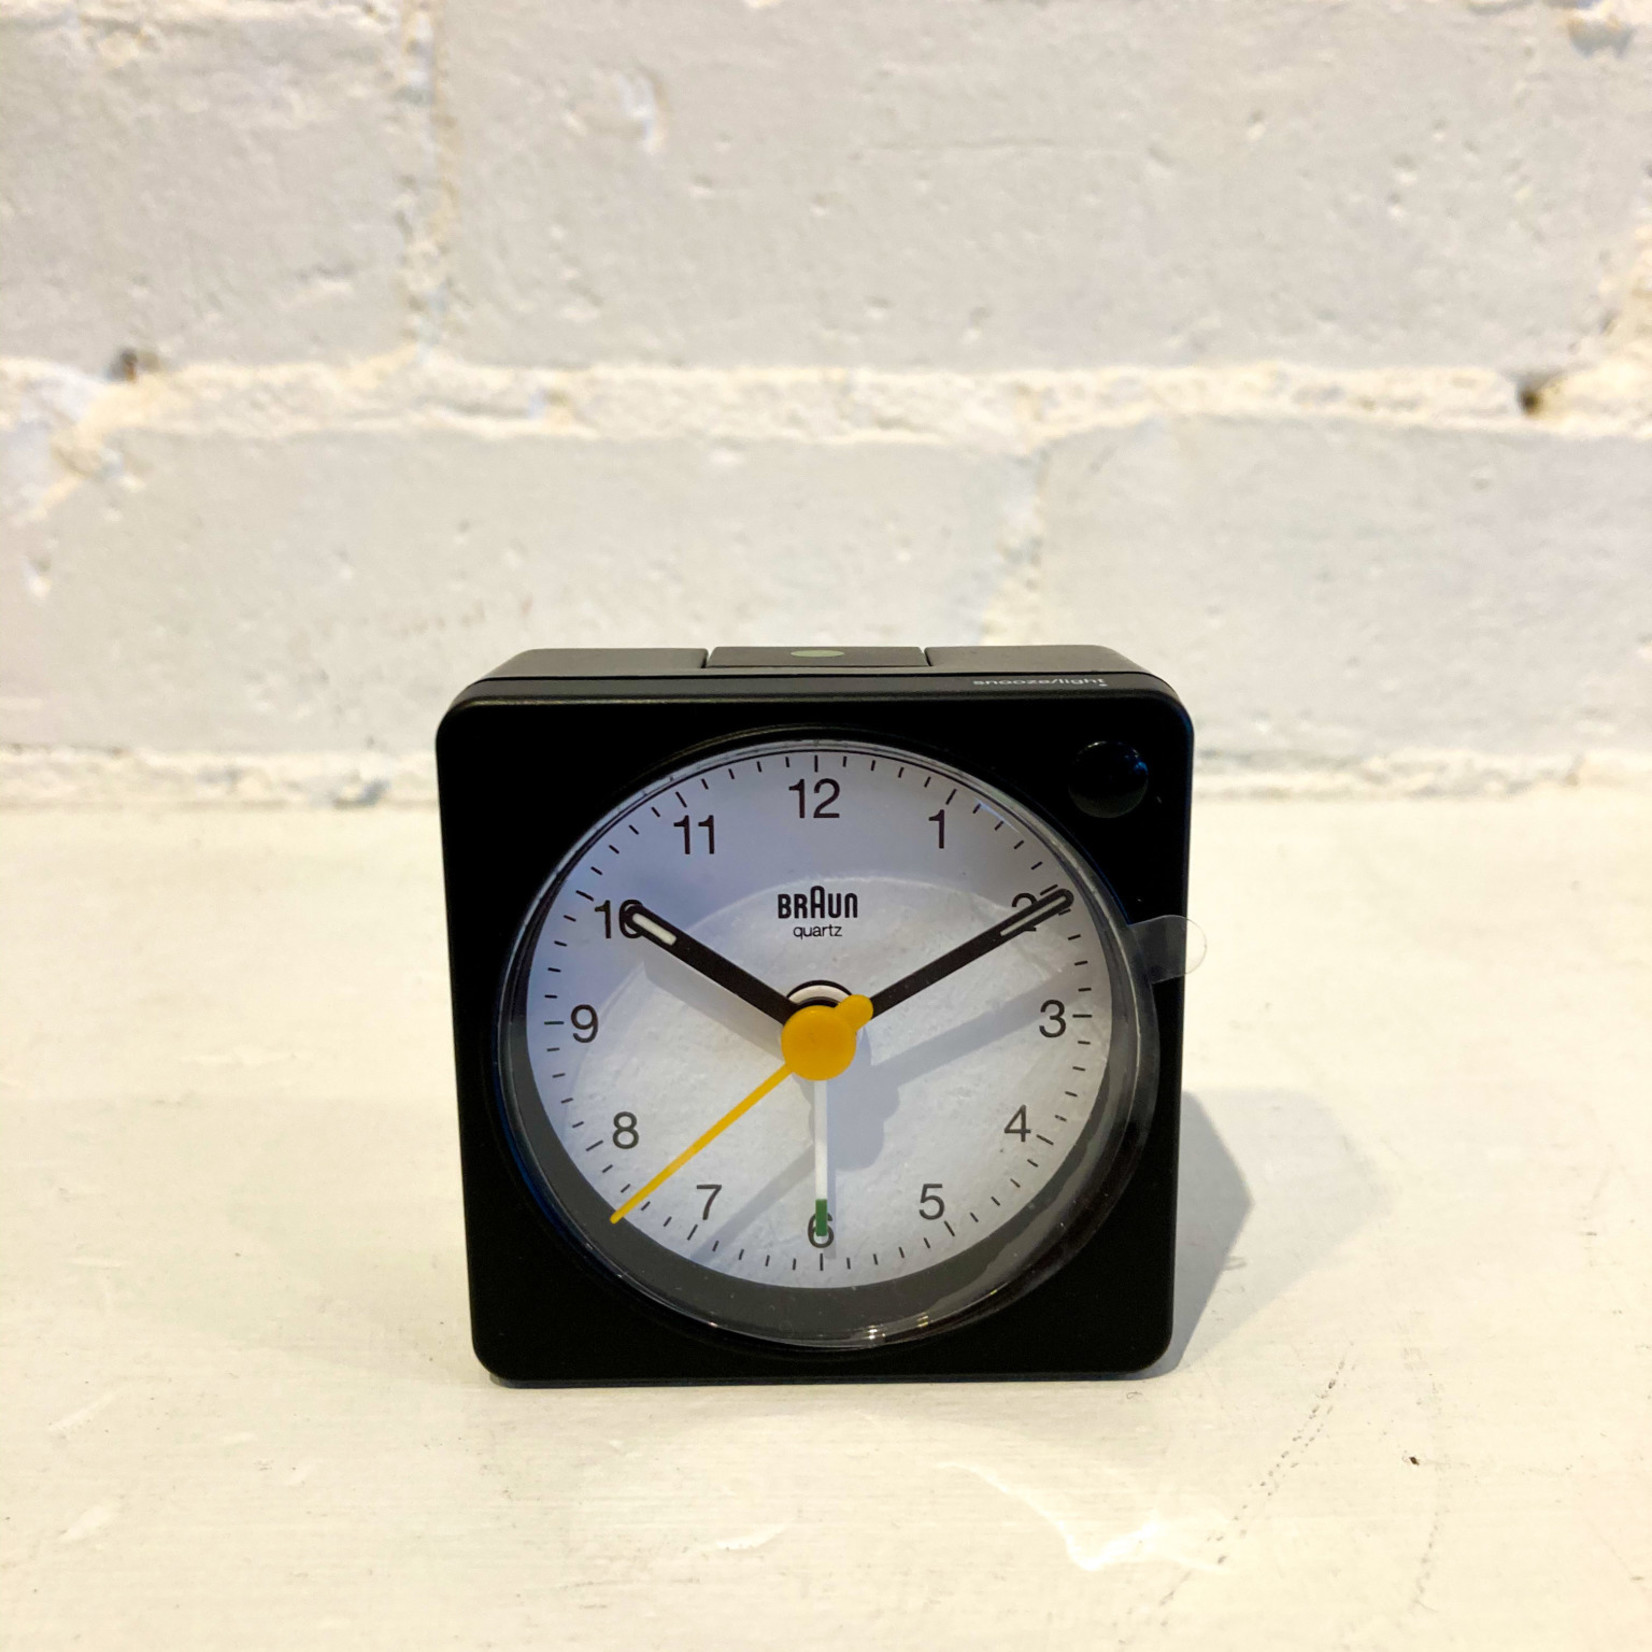 Braun: Travel Alarm Clock: Black / BC02XBW - Black Parrot